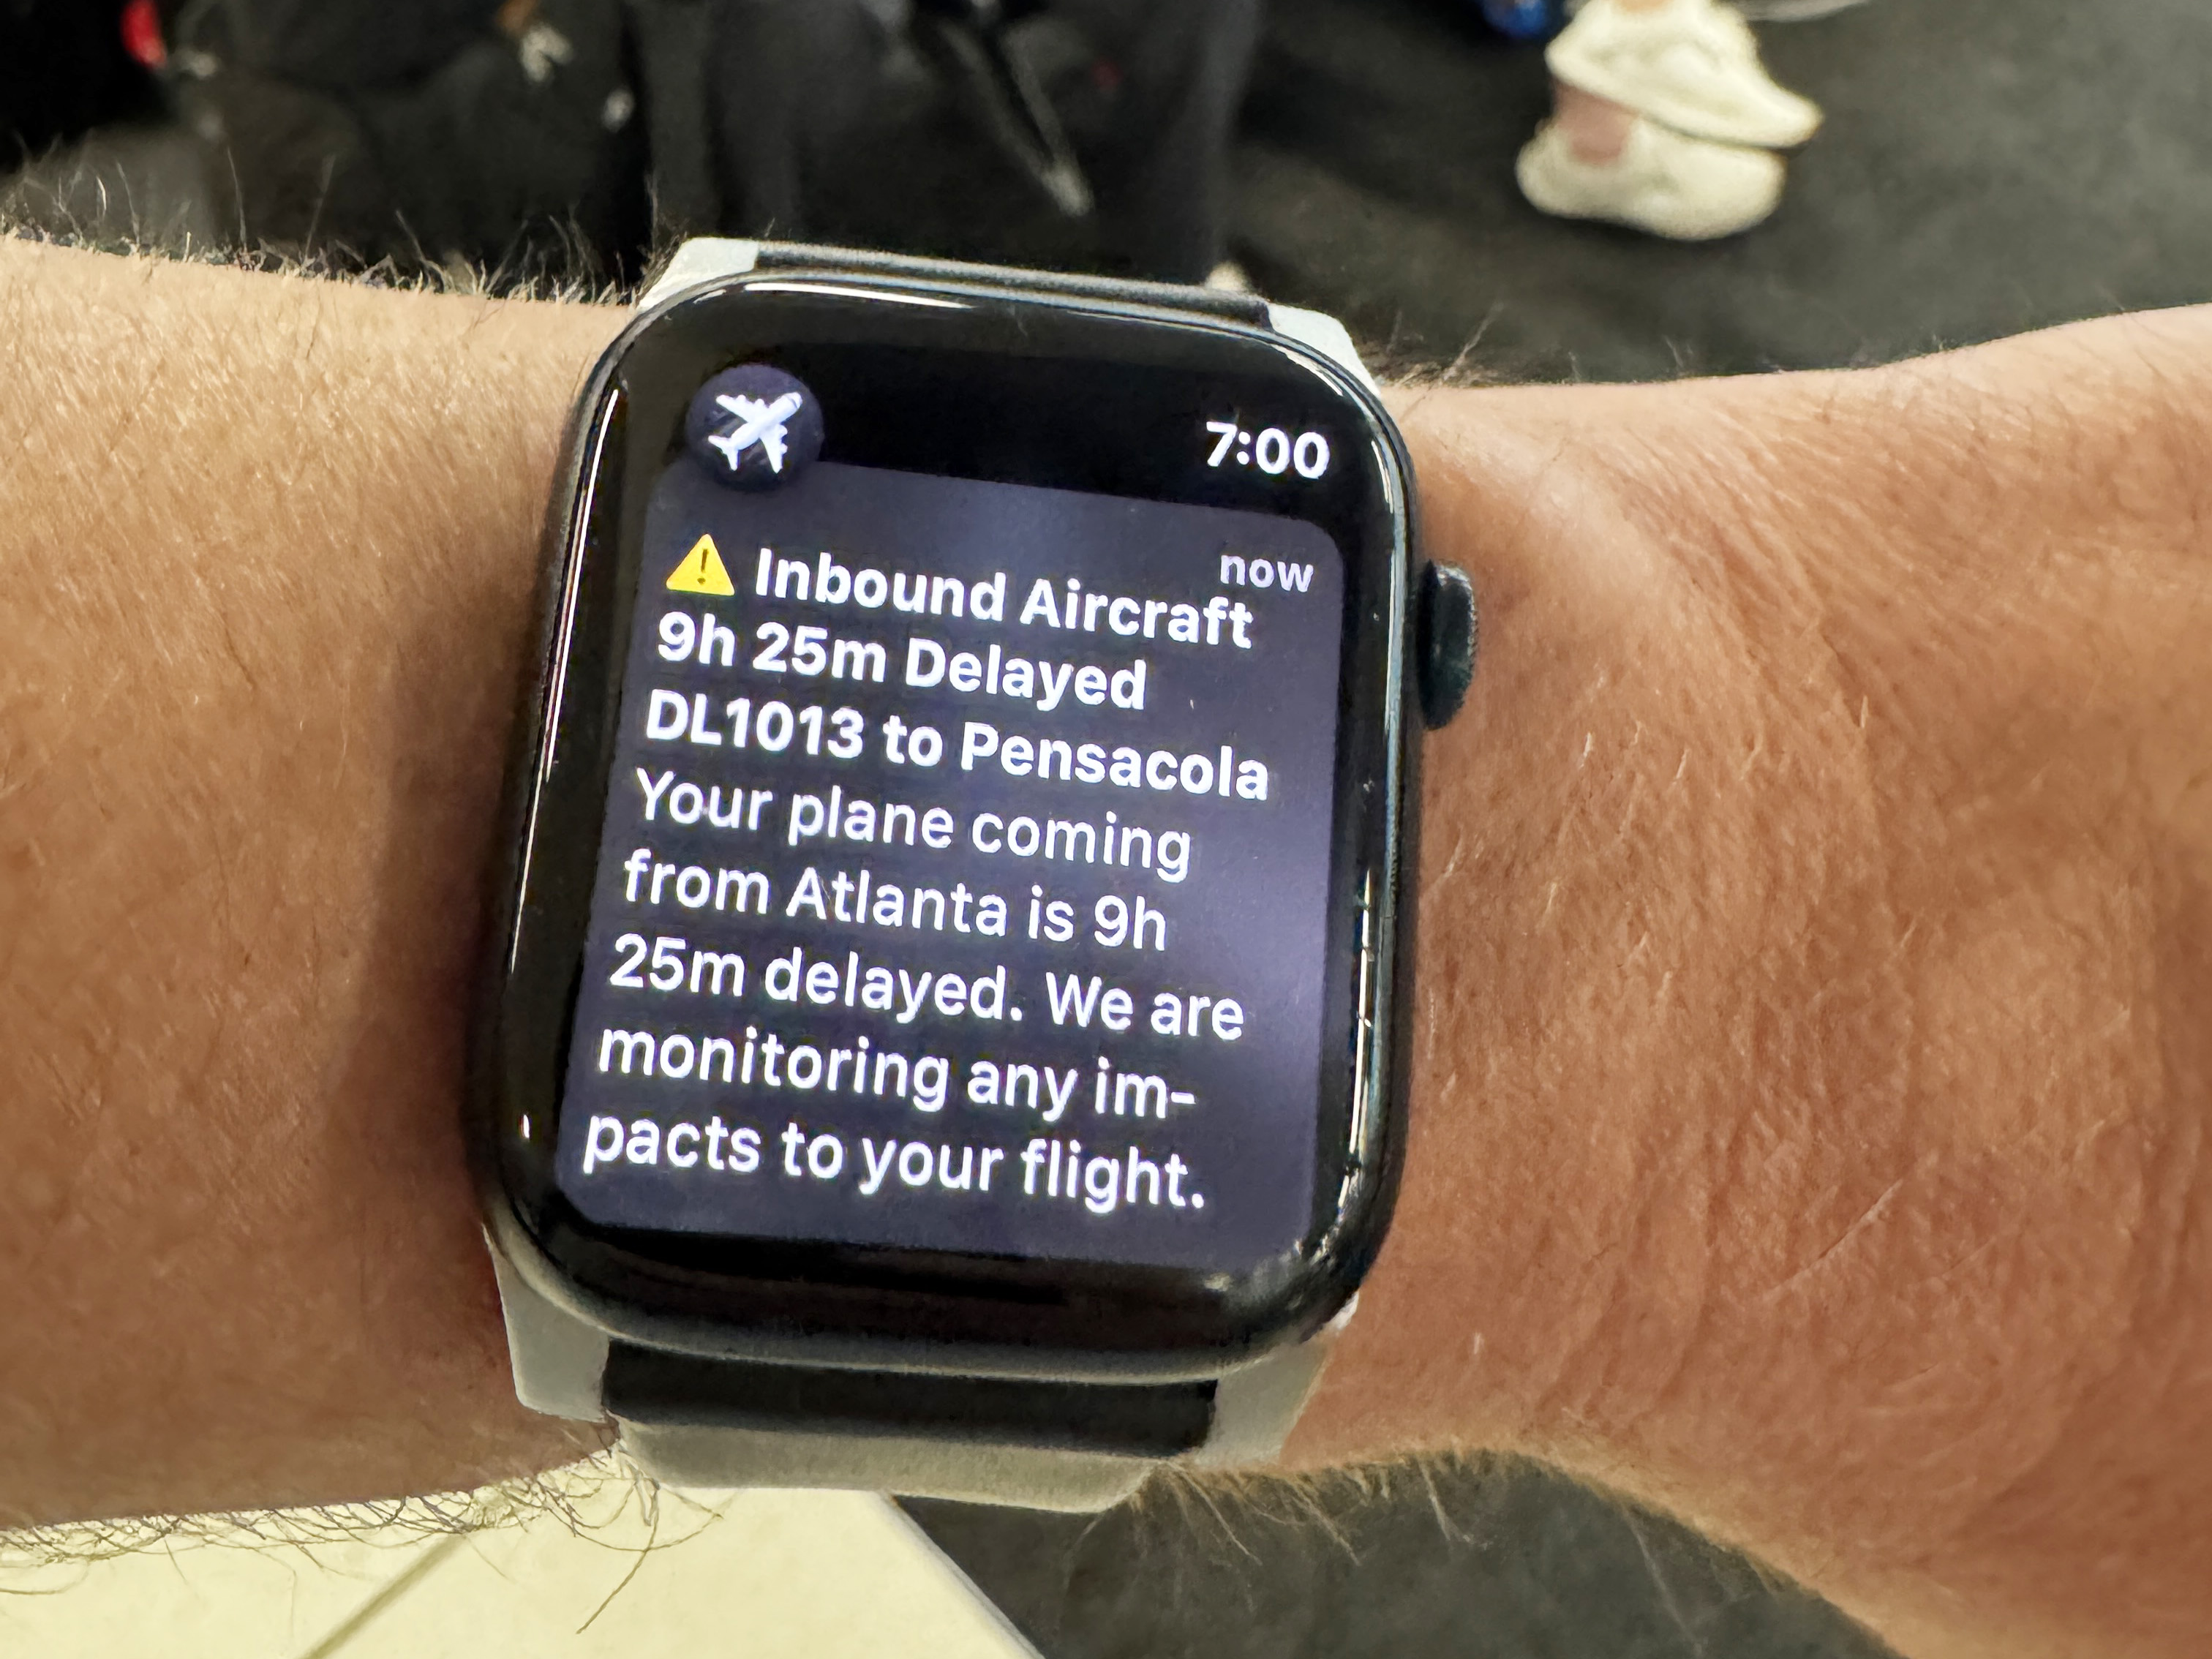 A notification from the Flighty app on an Apple Watch.